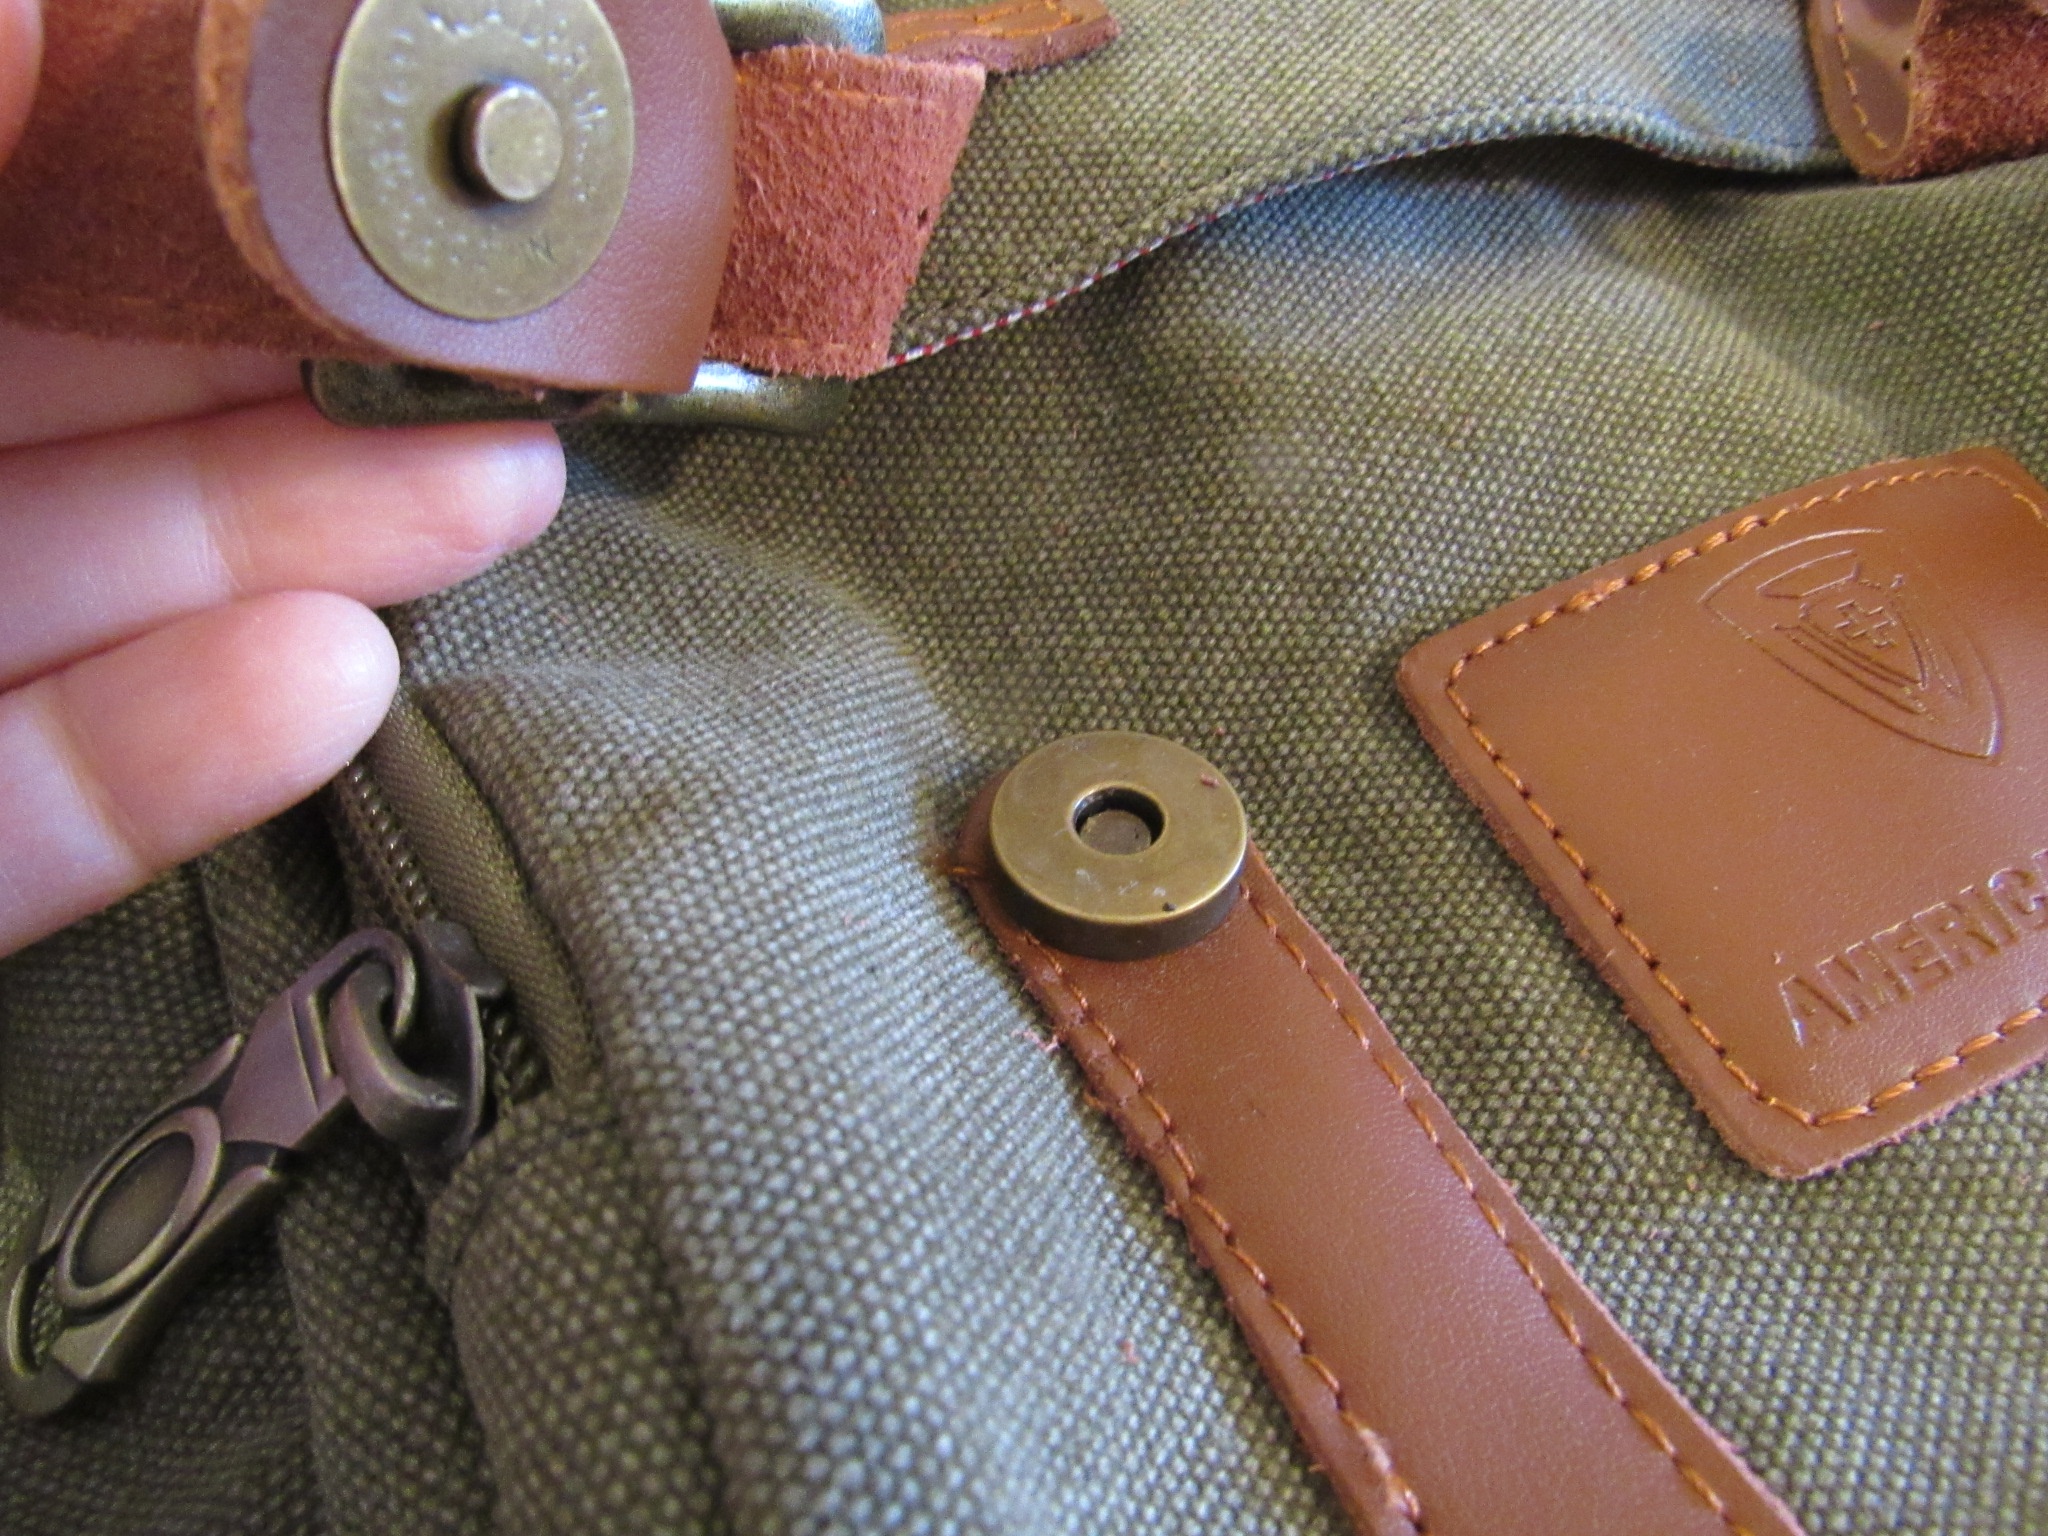 The American Shield Granite 25 series backpack is a hikers dream